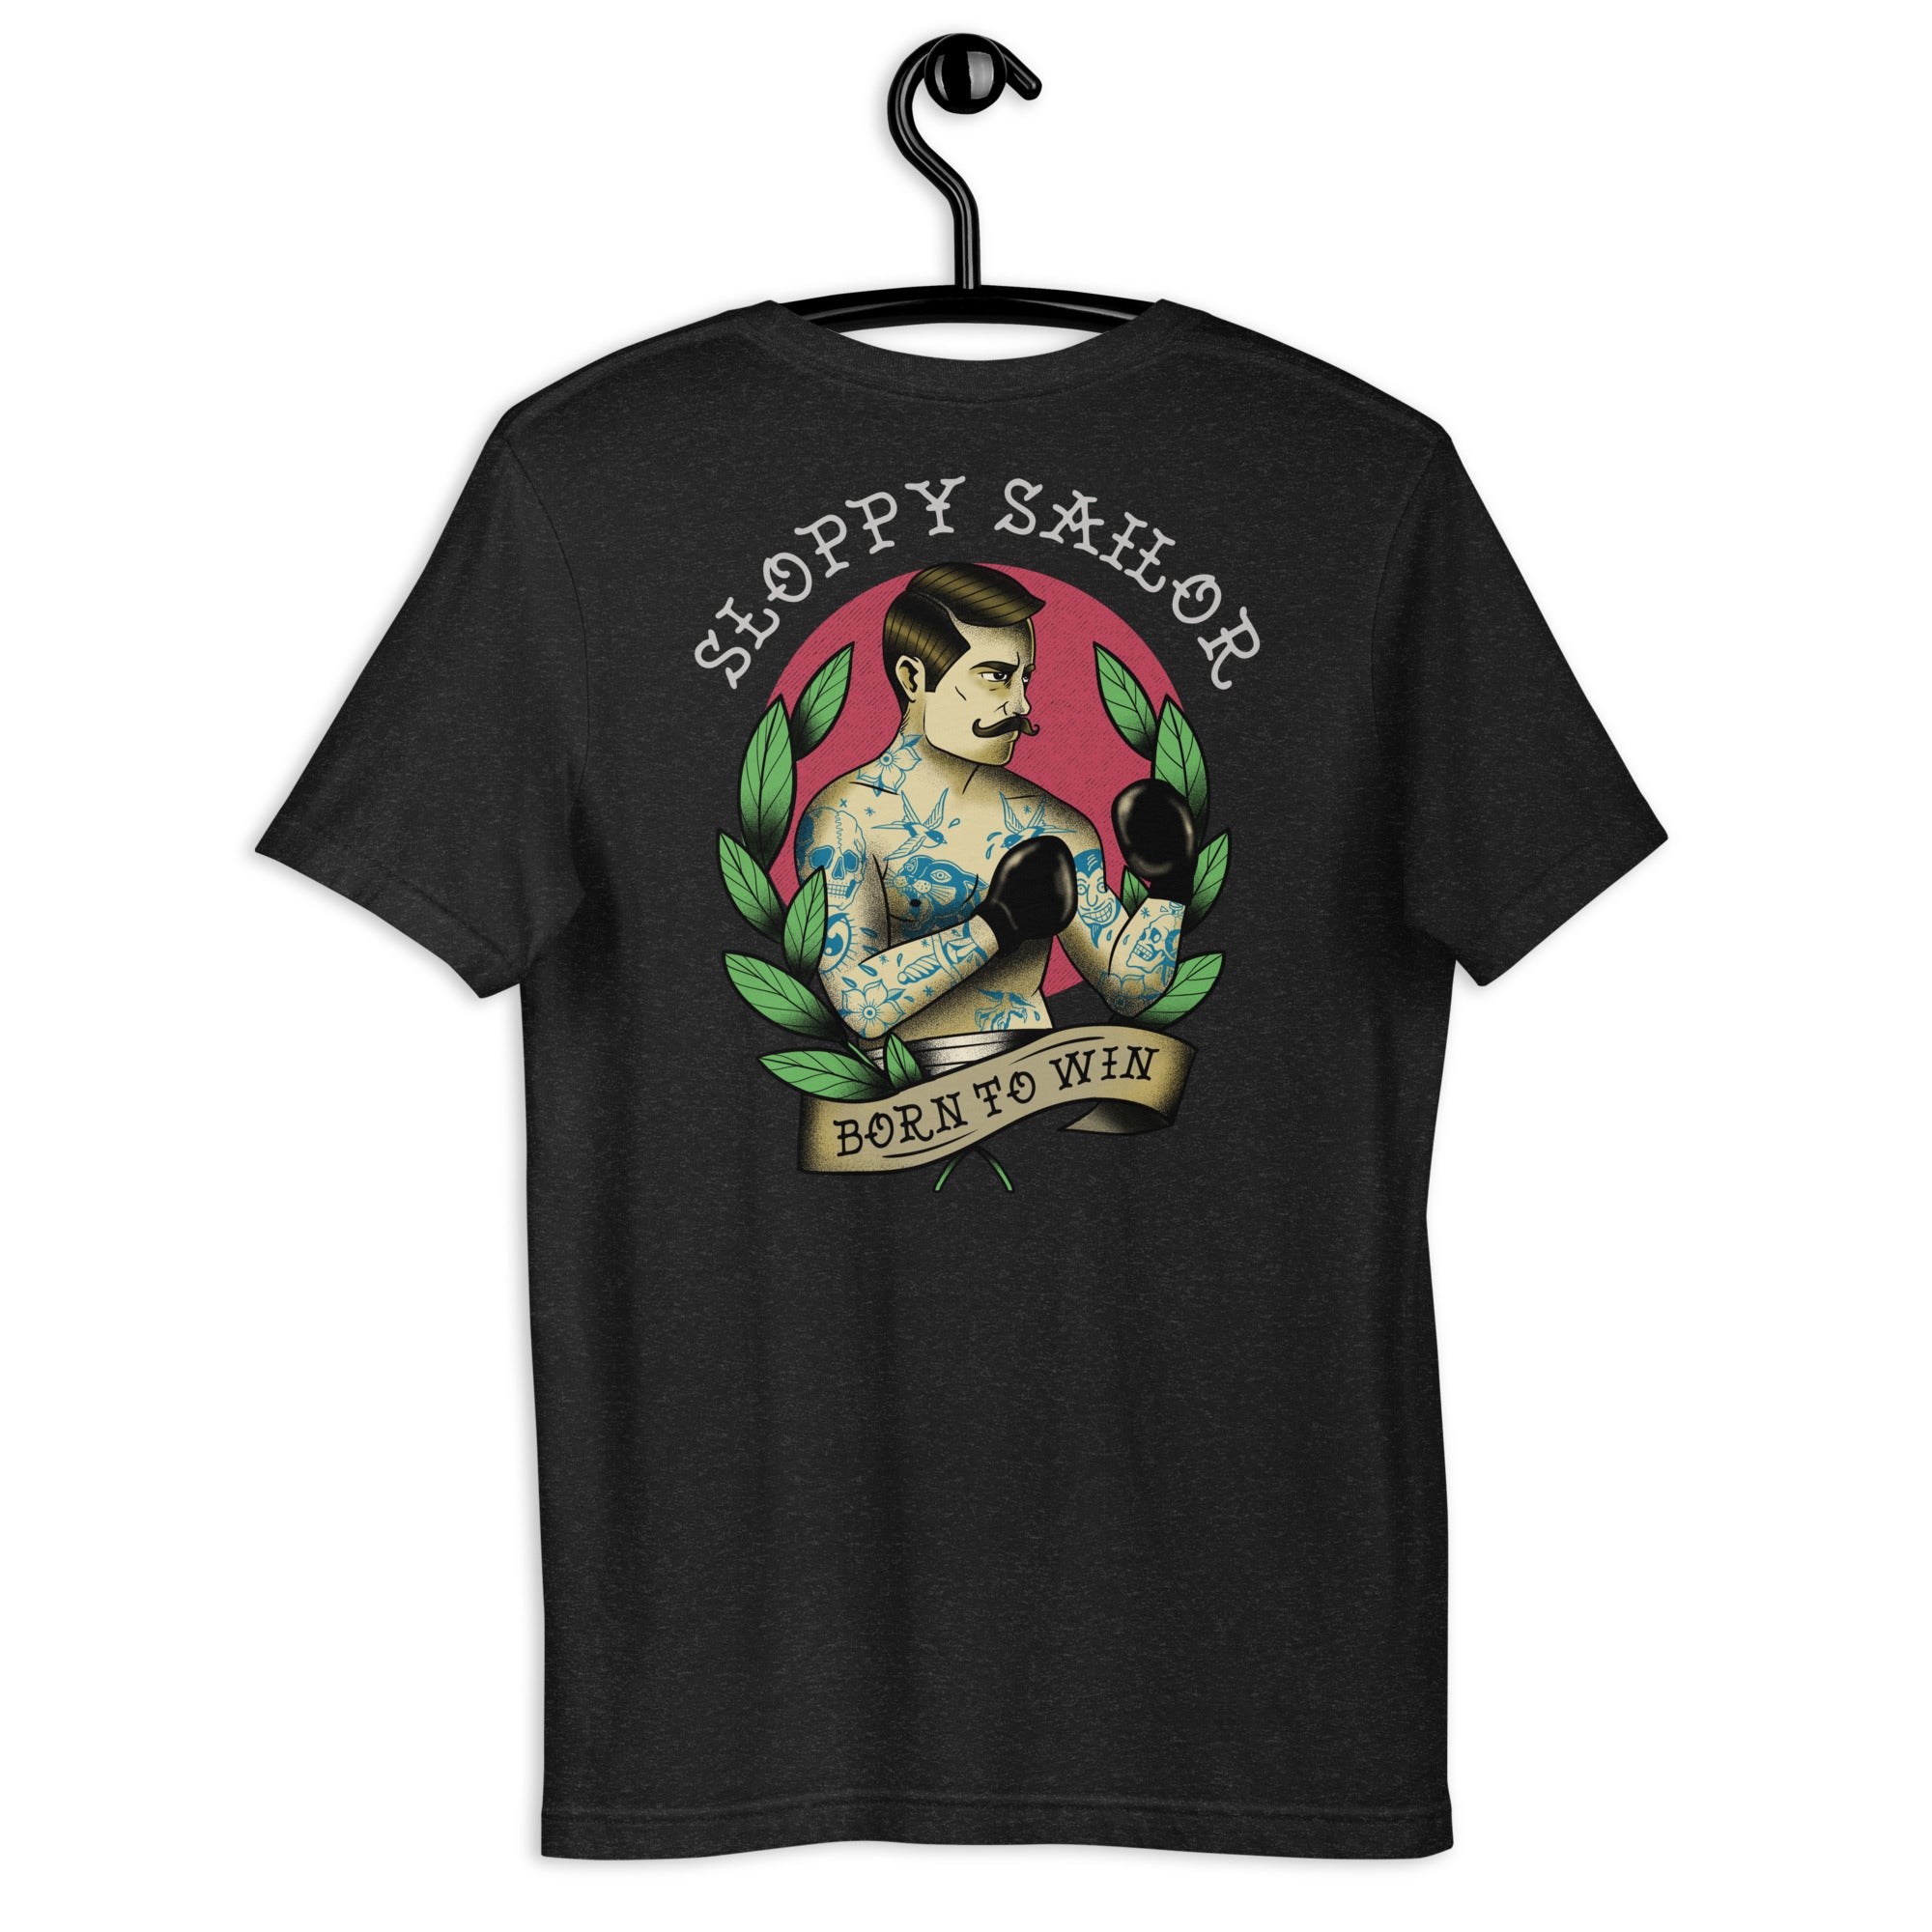 Born to win "BACK LOGO" Premium T-Shirt